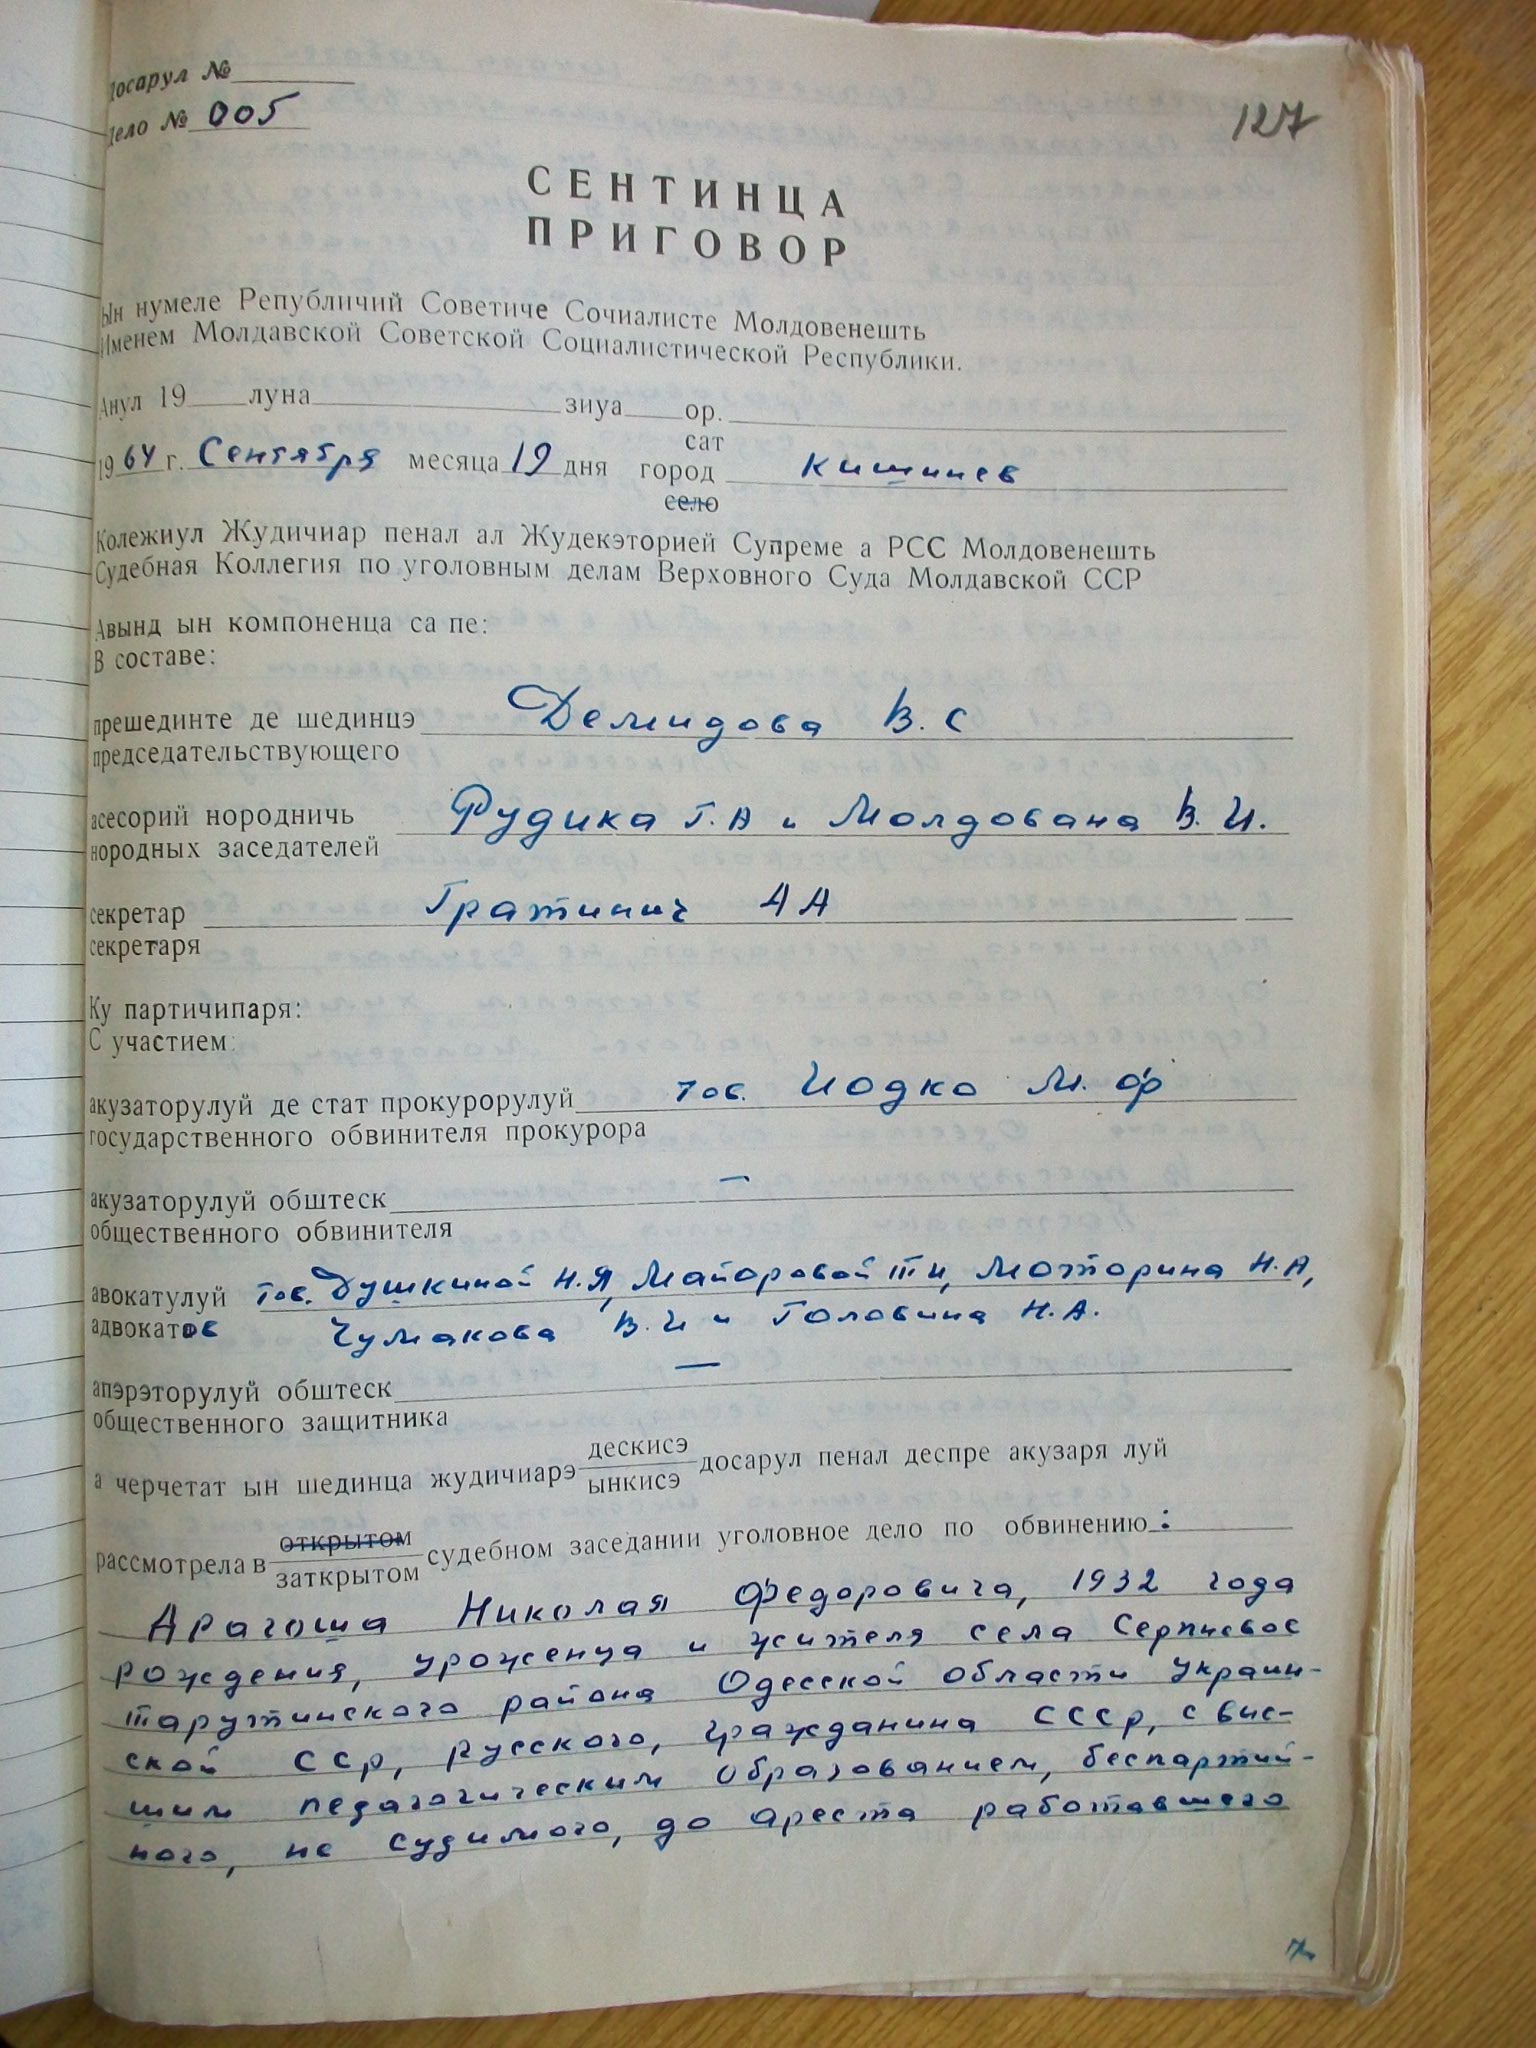 Source: National Archive of the Republic of MoldovaPhoto: Igor Cașu